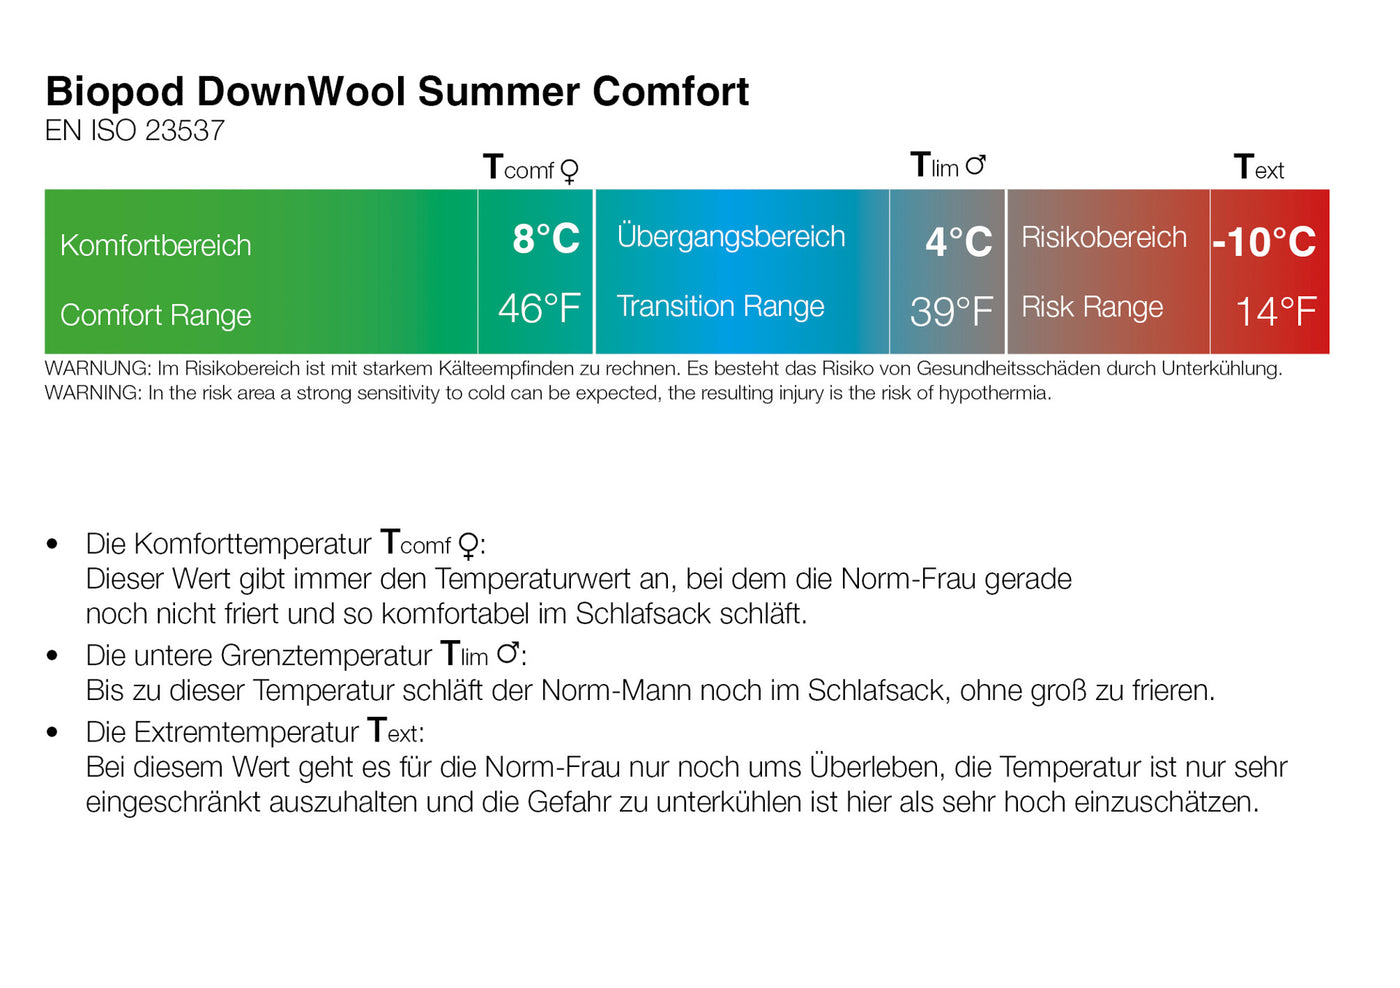 Grüezi bag Schlafsack Biopod DownWool Summer Comfort - Temperaturangaben